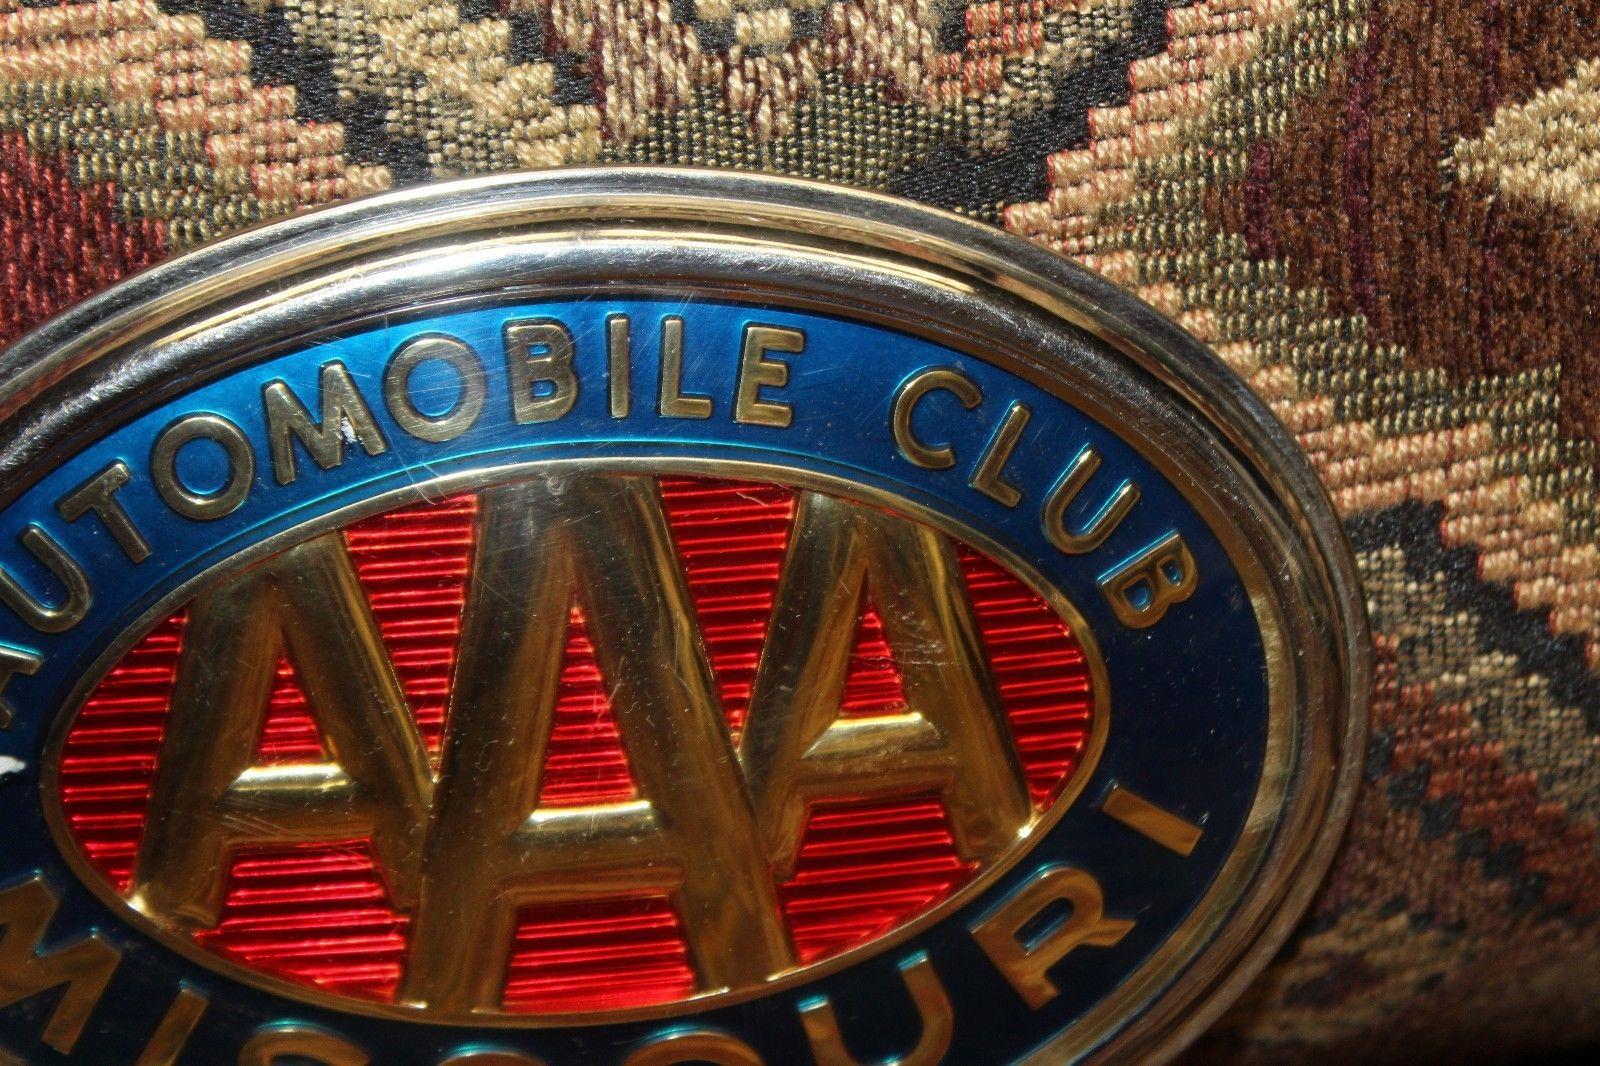 Metal Original AAA Automobile Club Missouri Vintage License Plate Topper For Sale